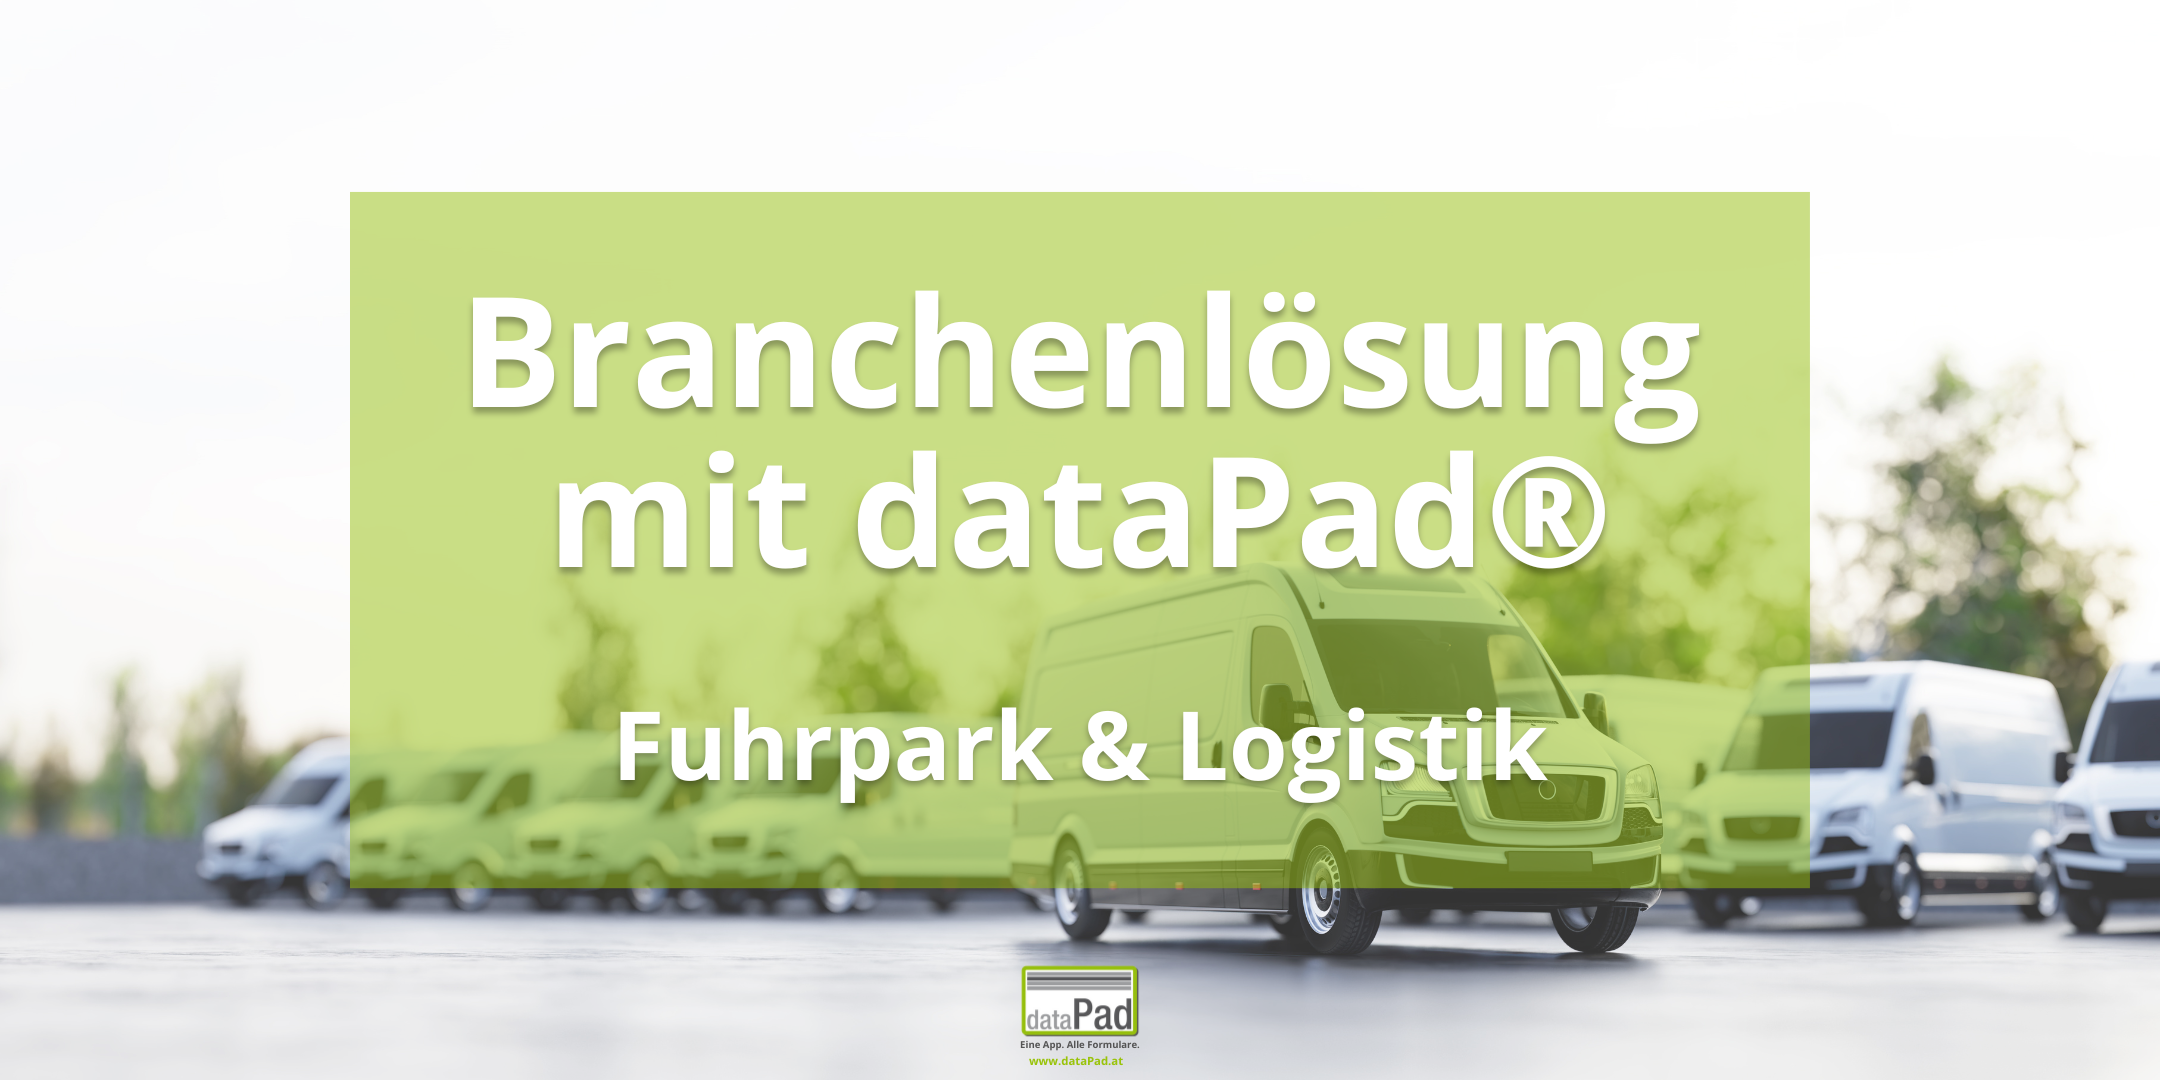 dataPad_Branchenlösung_Fuhrpark_&_Logistik